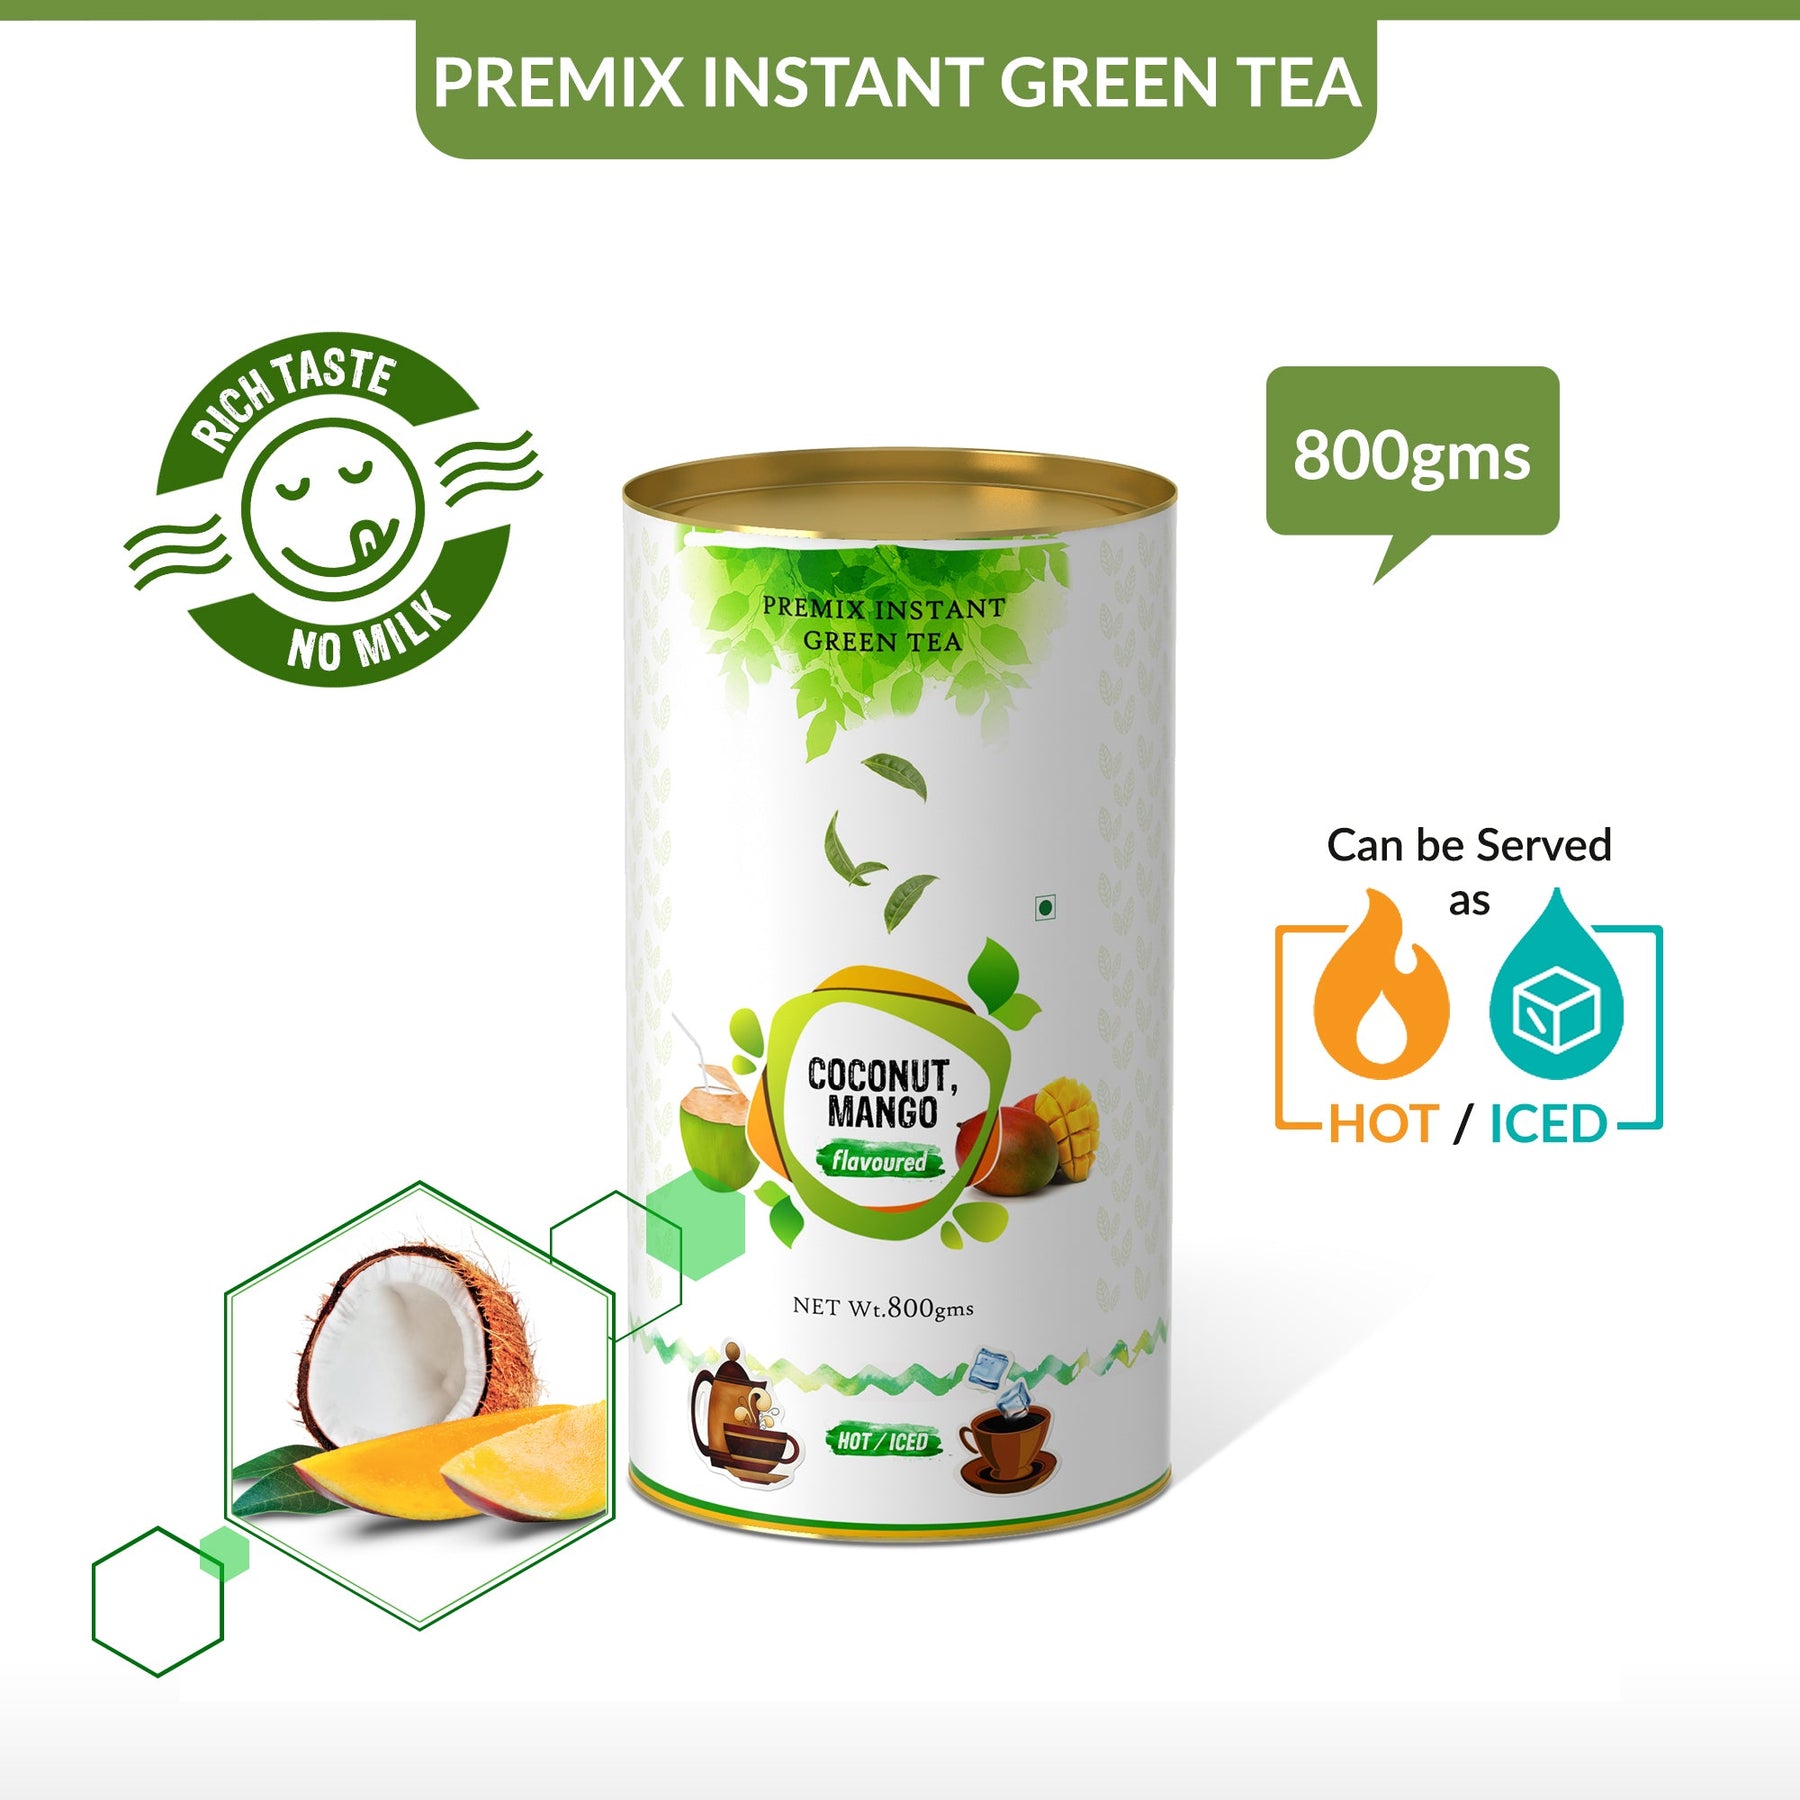 Coconut Mango Flavored Instant Green Tea